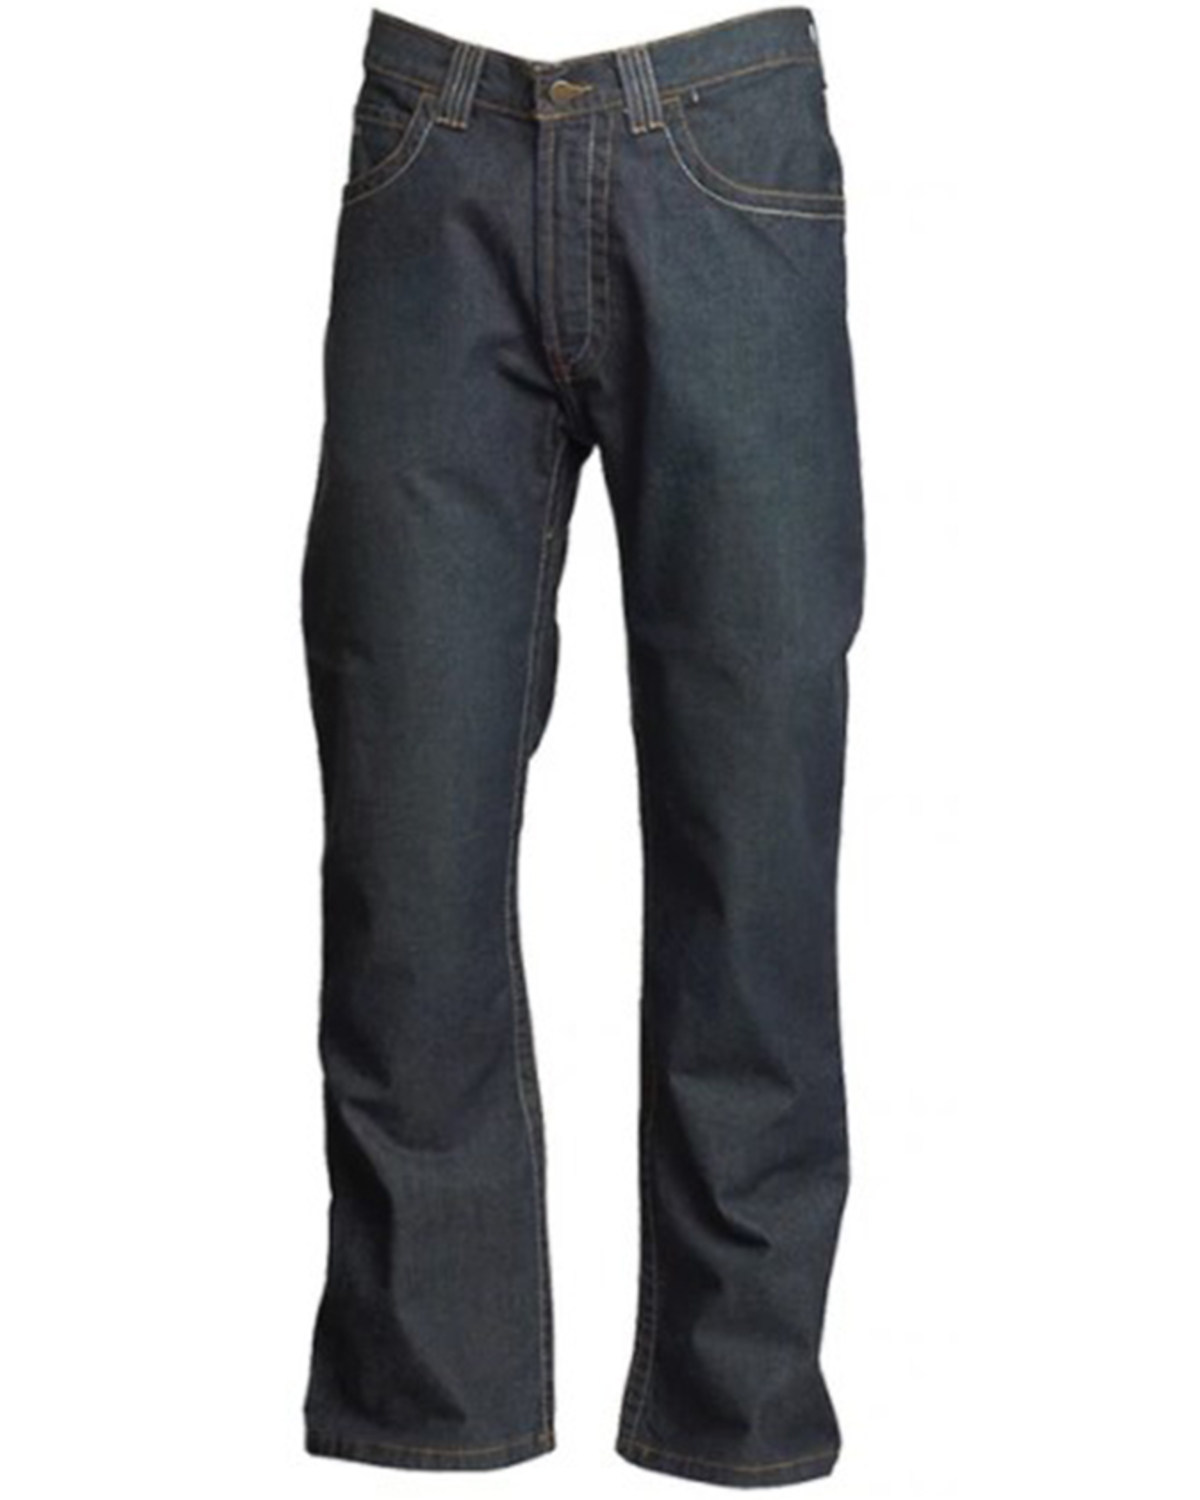 Lapco Men's FR Dark Wash Modern Fit Bootcut Work Jeans - Big